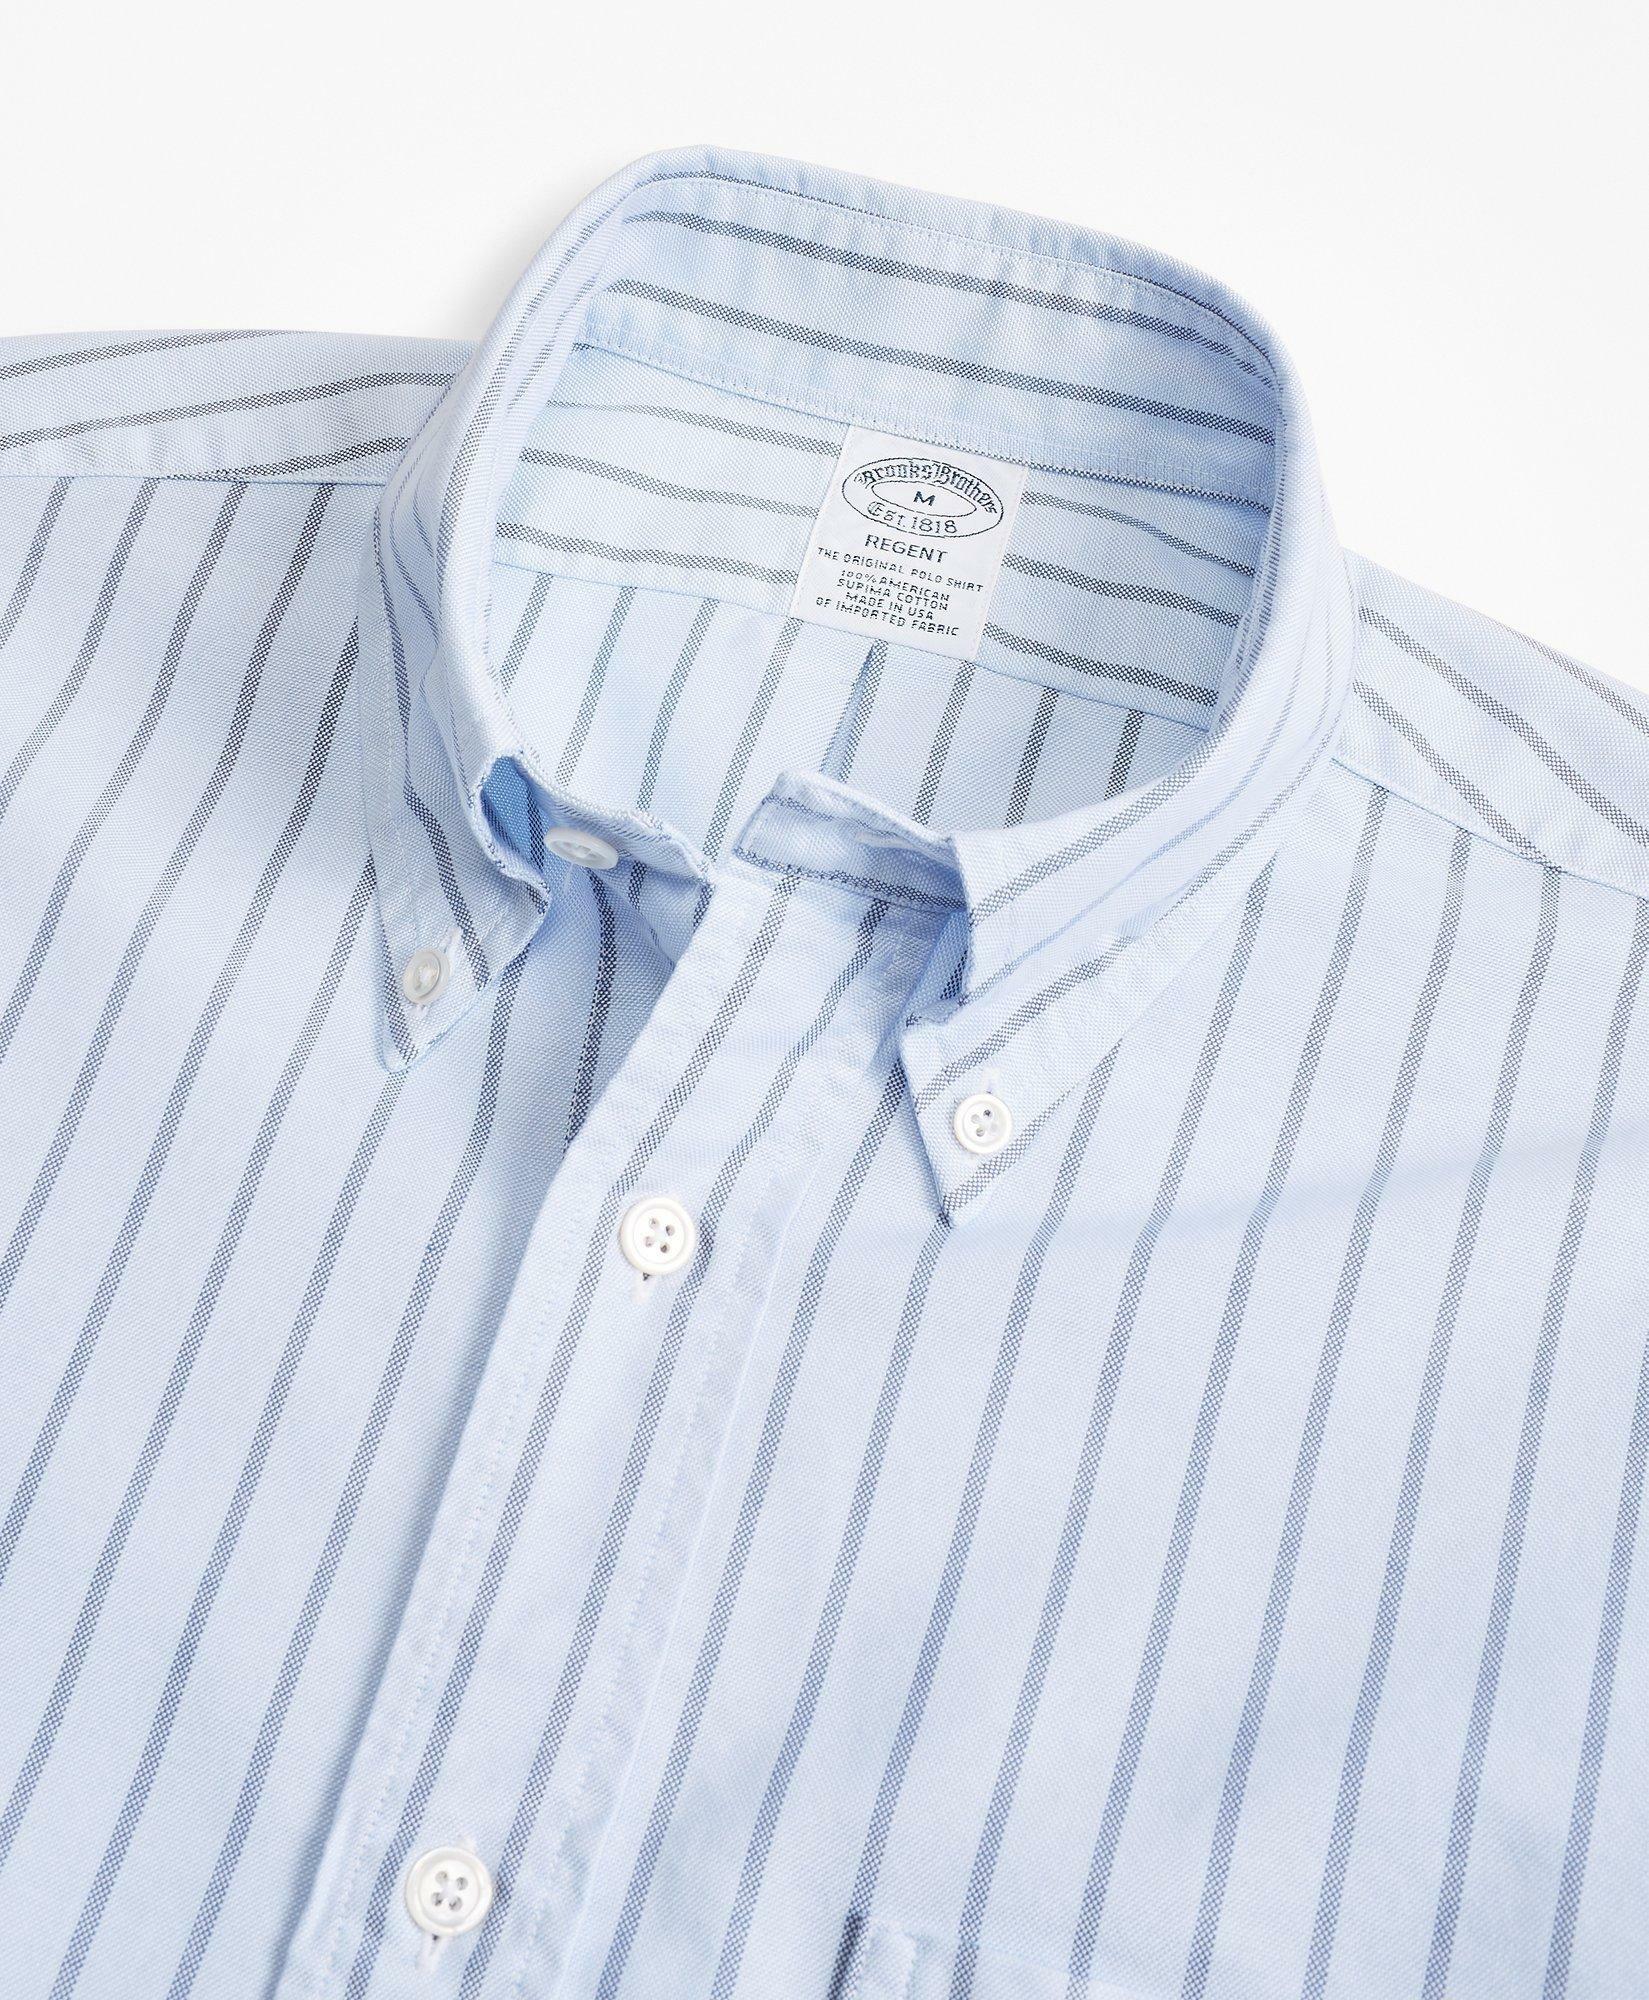 Brooks Brothers Men's Regent Regular-Fit Oxford Stripe Sport Shirt | Light Blue